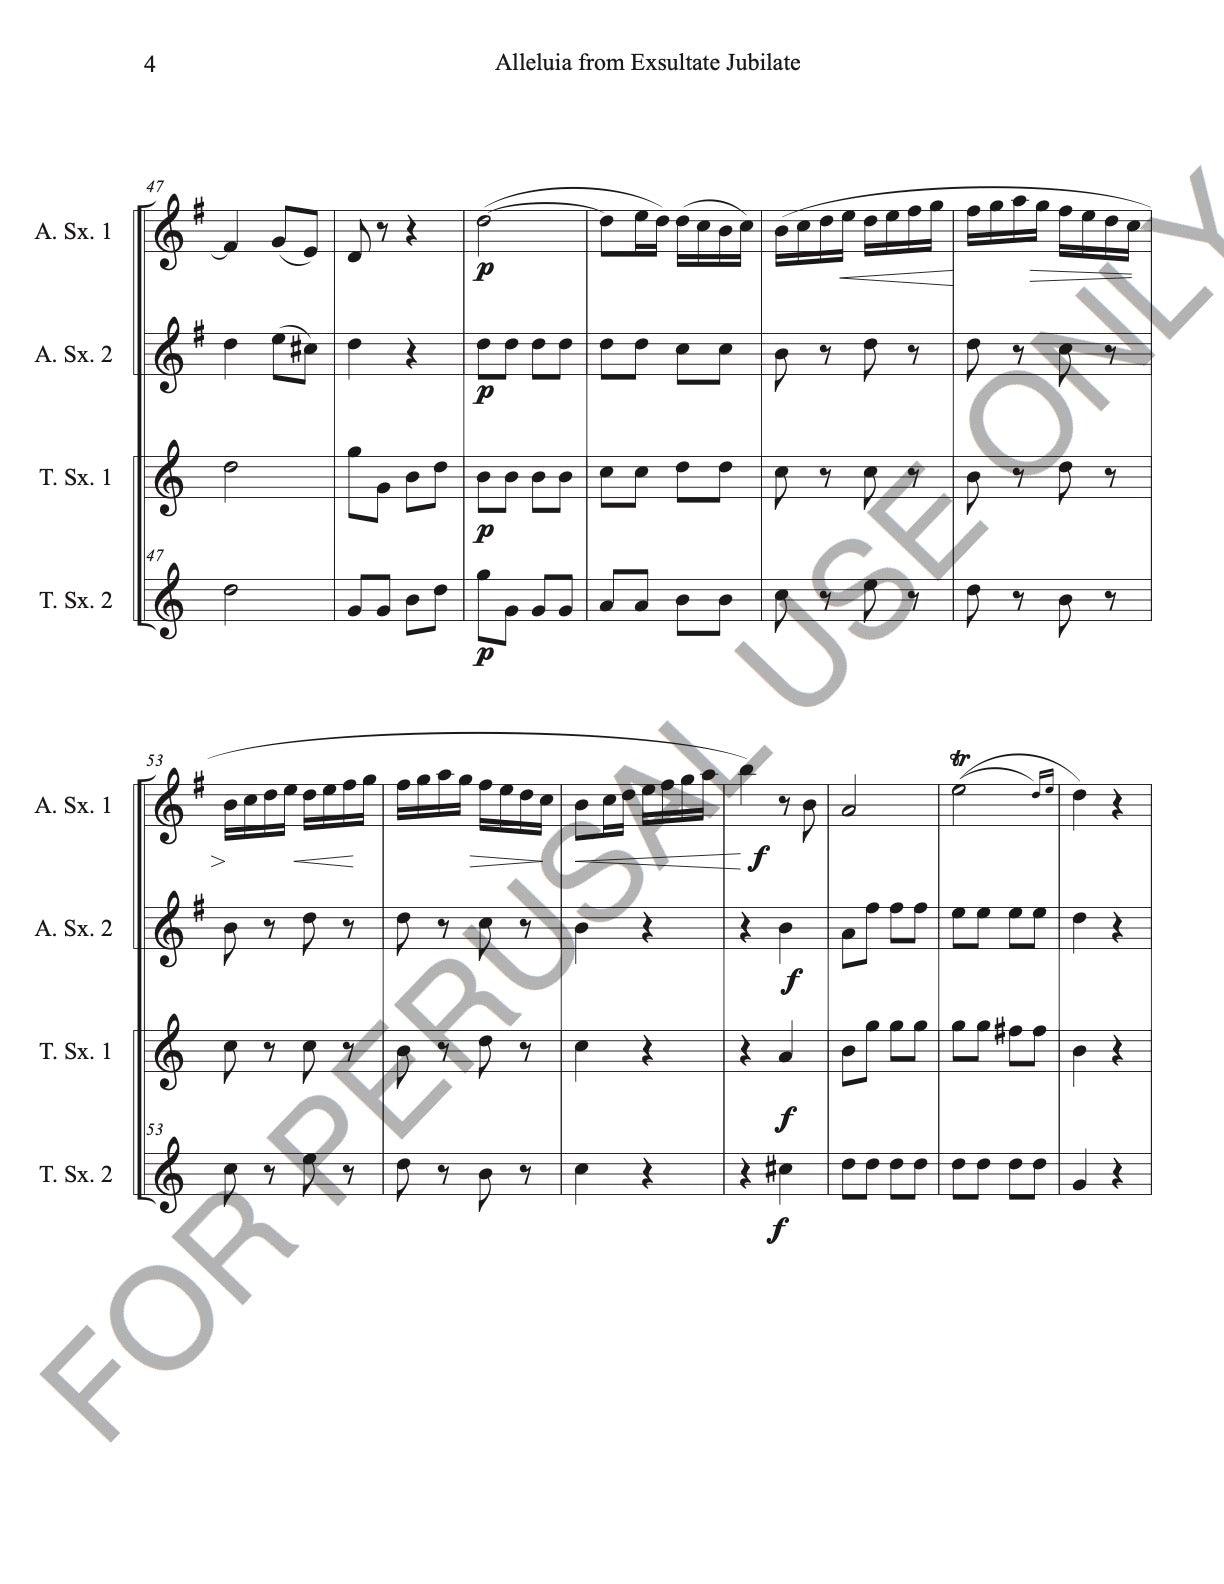 Sax Quartet Sheet Music (AATT)- Mozart's Alleluia from Exsultate Jubilate - ChaipruckMekara